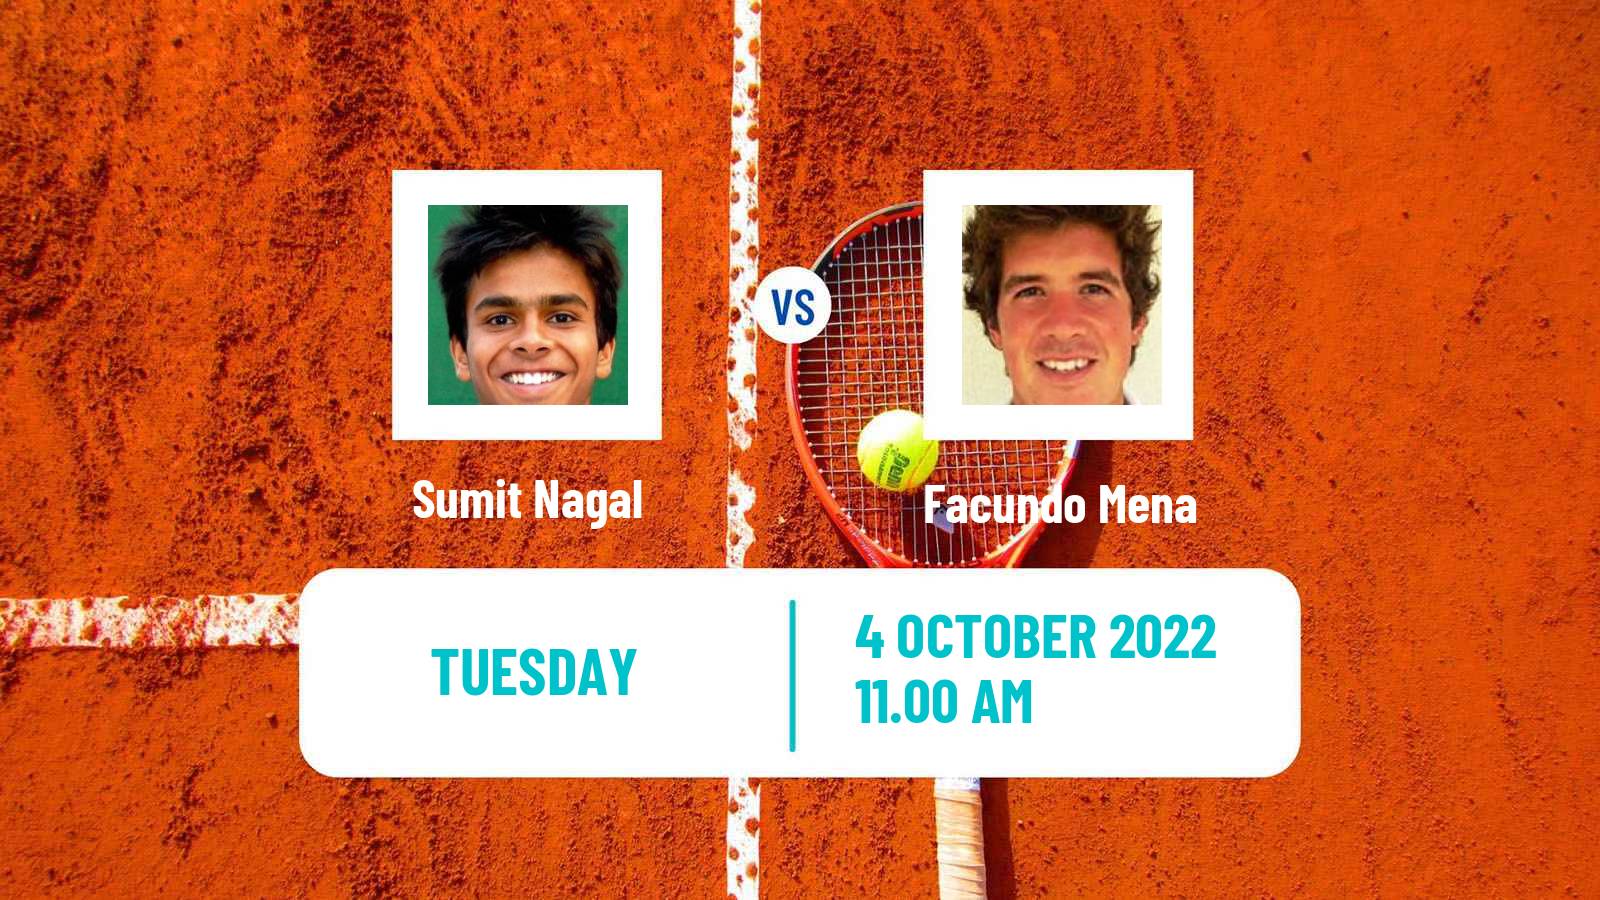 Tennis ATP Challenger Sumit Nagal - Facundo Mena